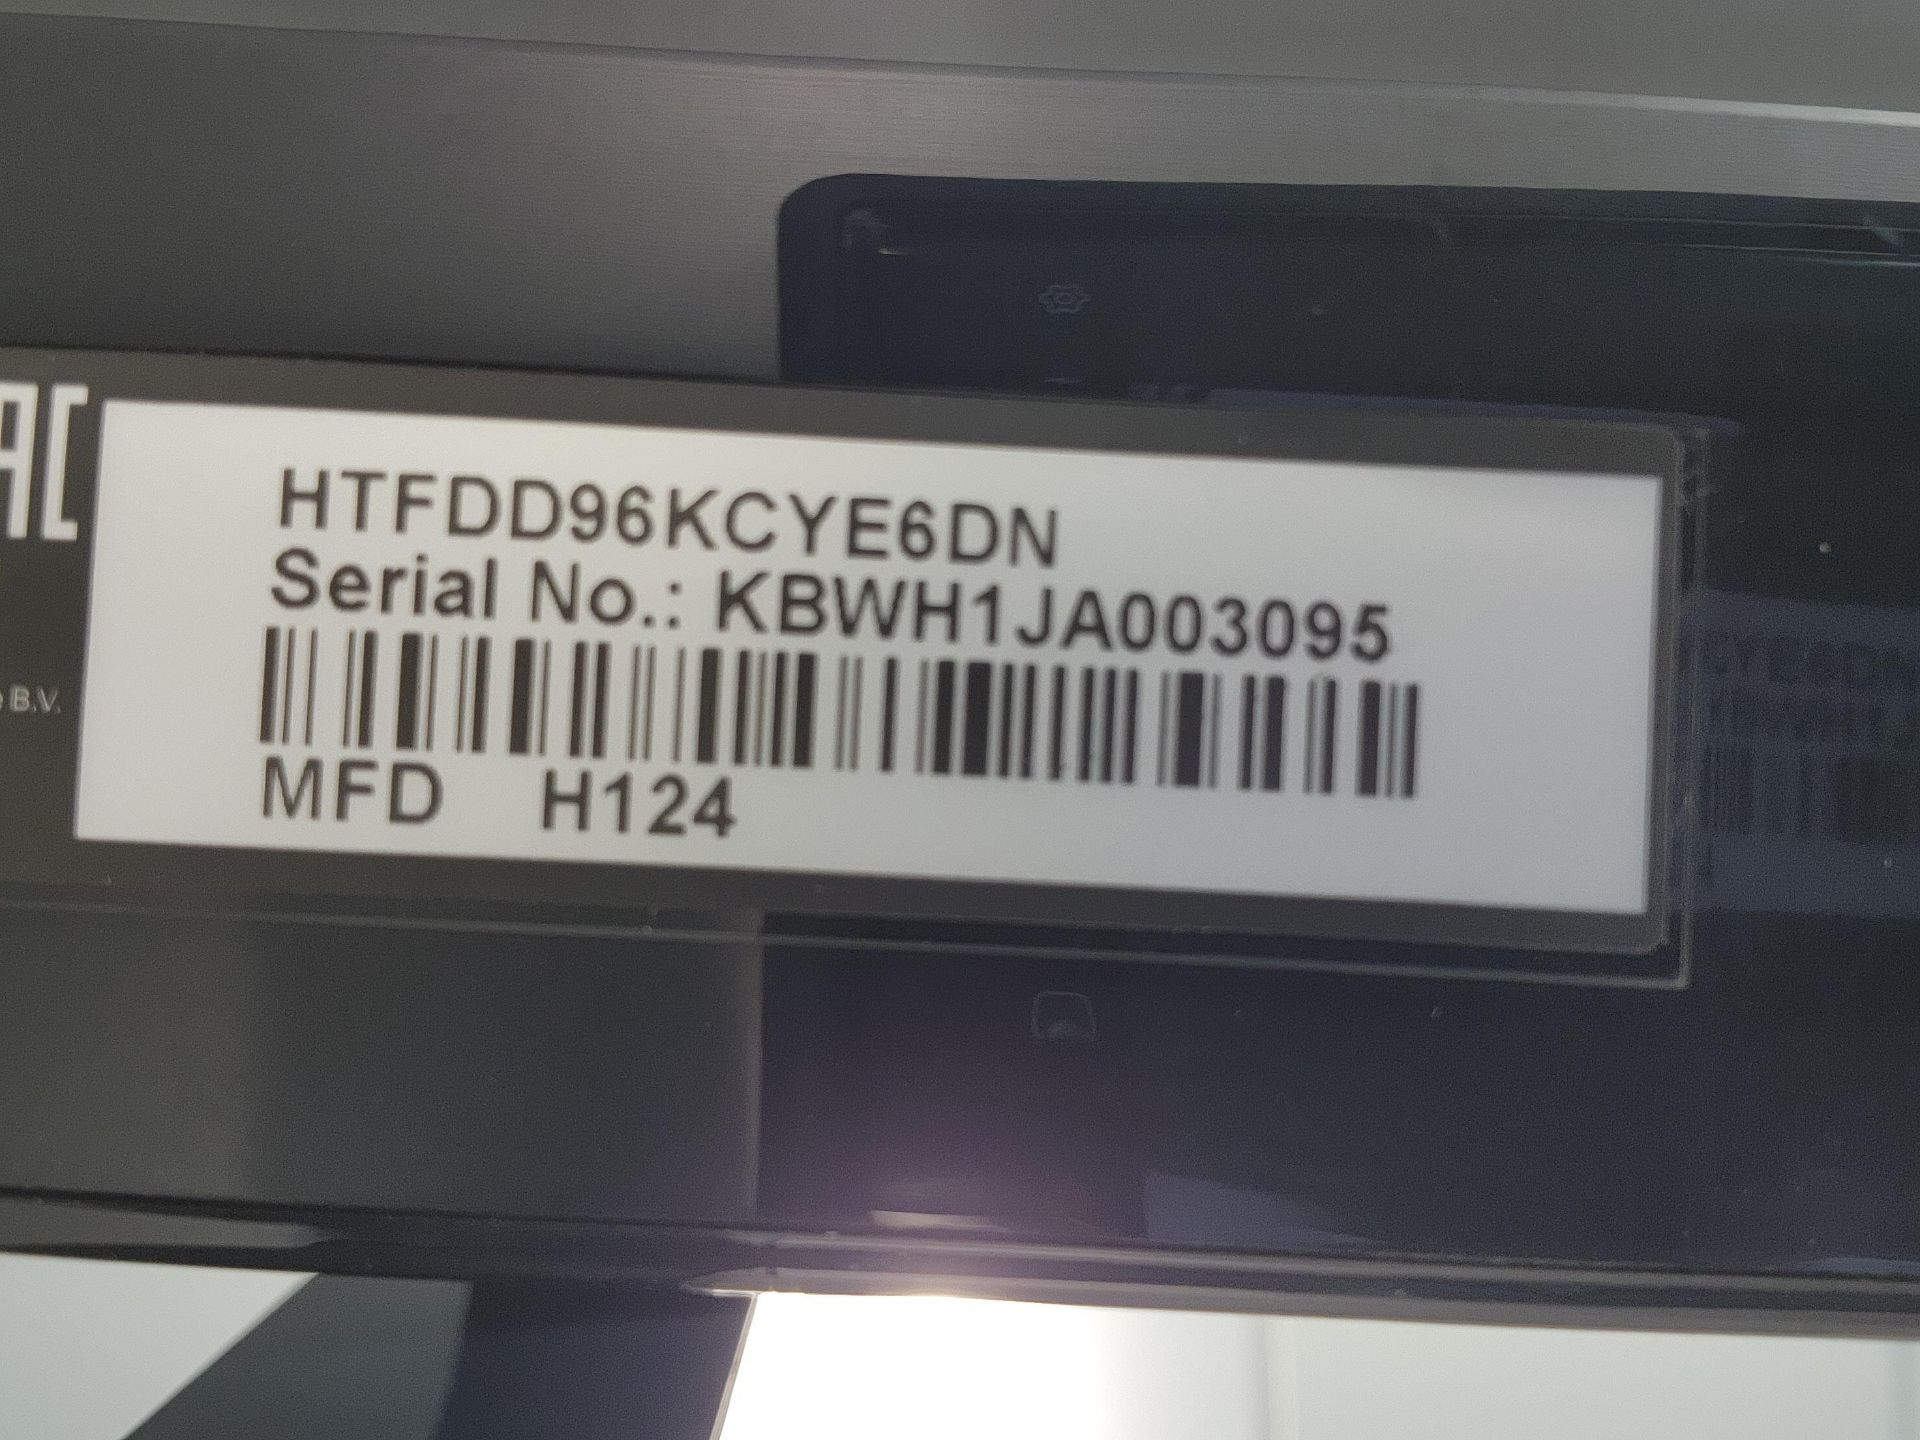 AOC Model U2879VF 28" Professional 4K UHD LED Backlit Monitor, 3840 x 2160 Pixel, S/N KBWH1JA003095 - Image 5 of 5